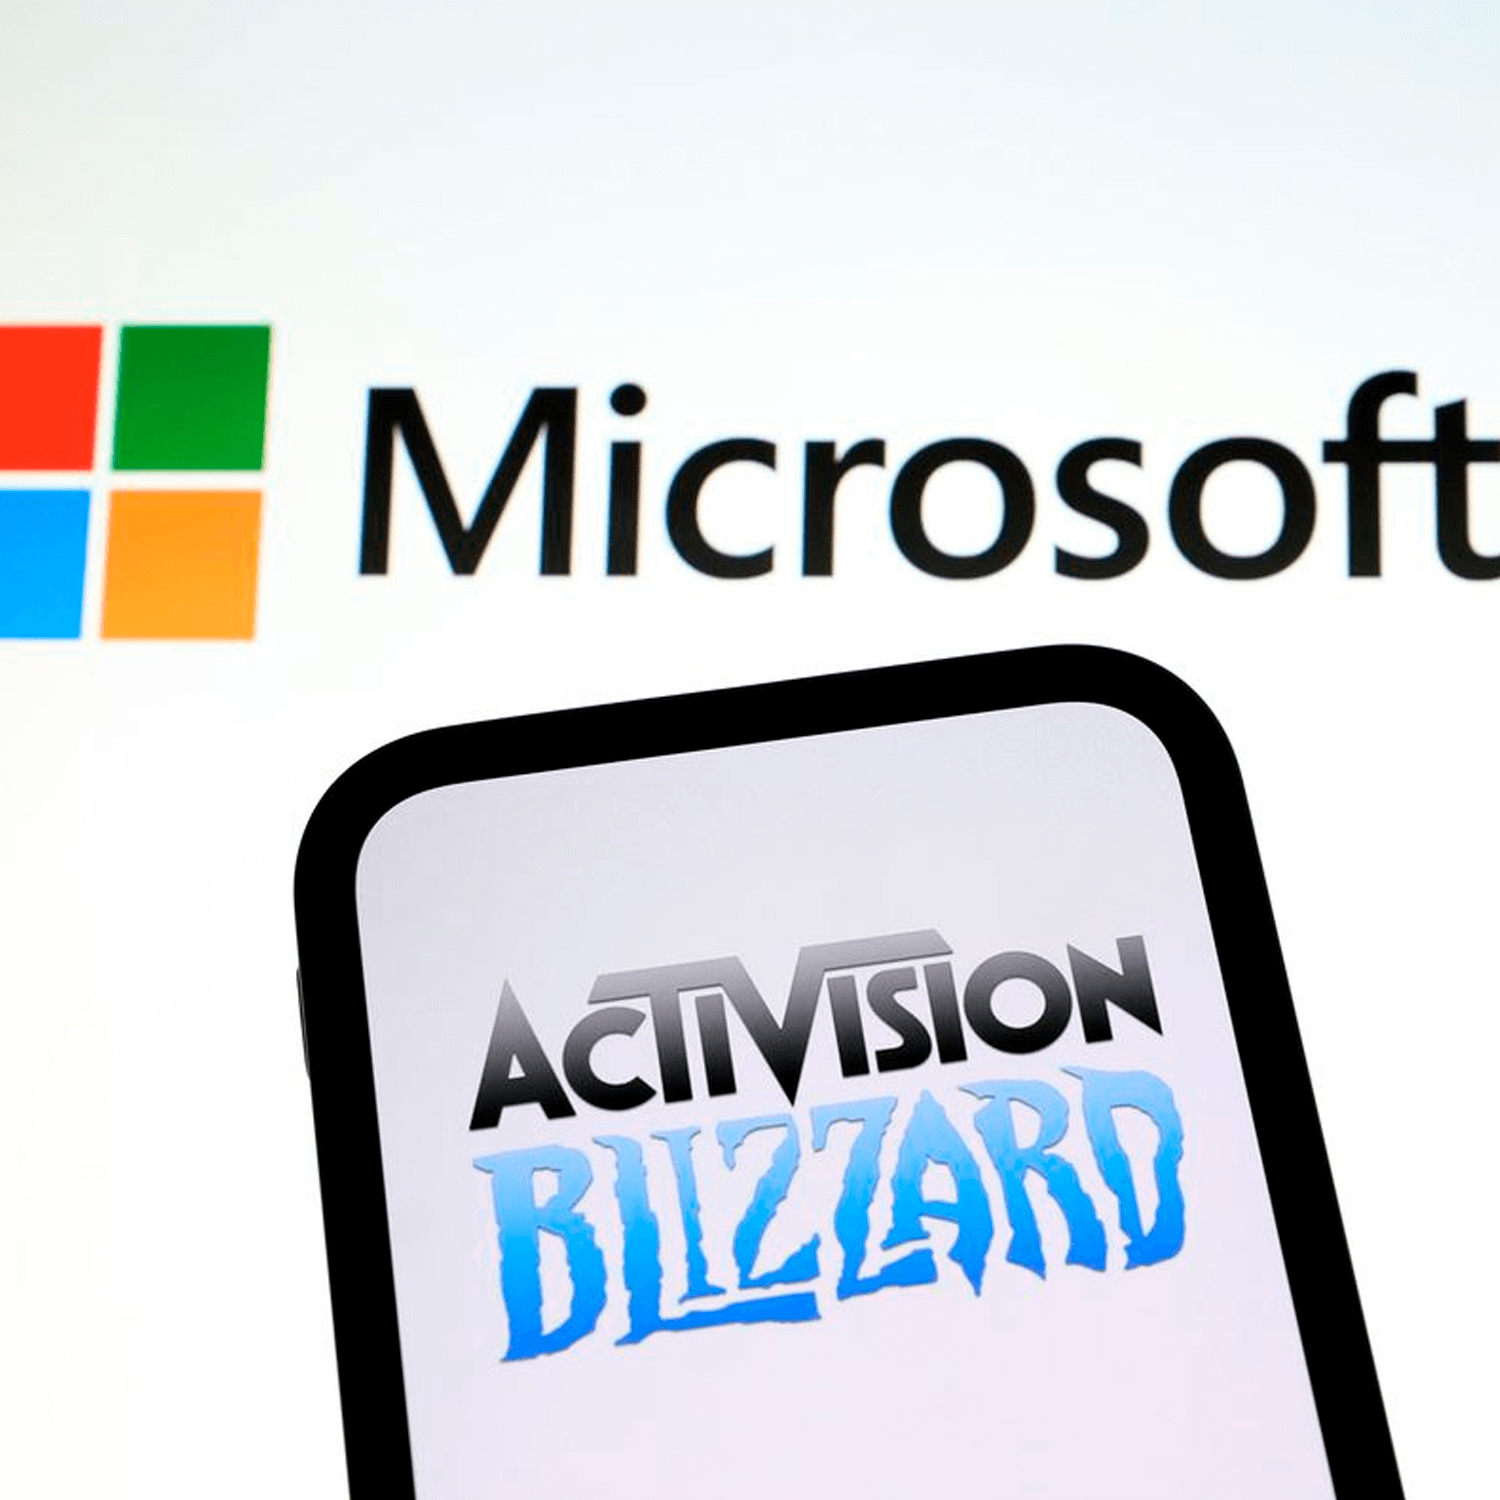 ¡Jugadores demandan que Microsoft no compre Activision Blizzard!